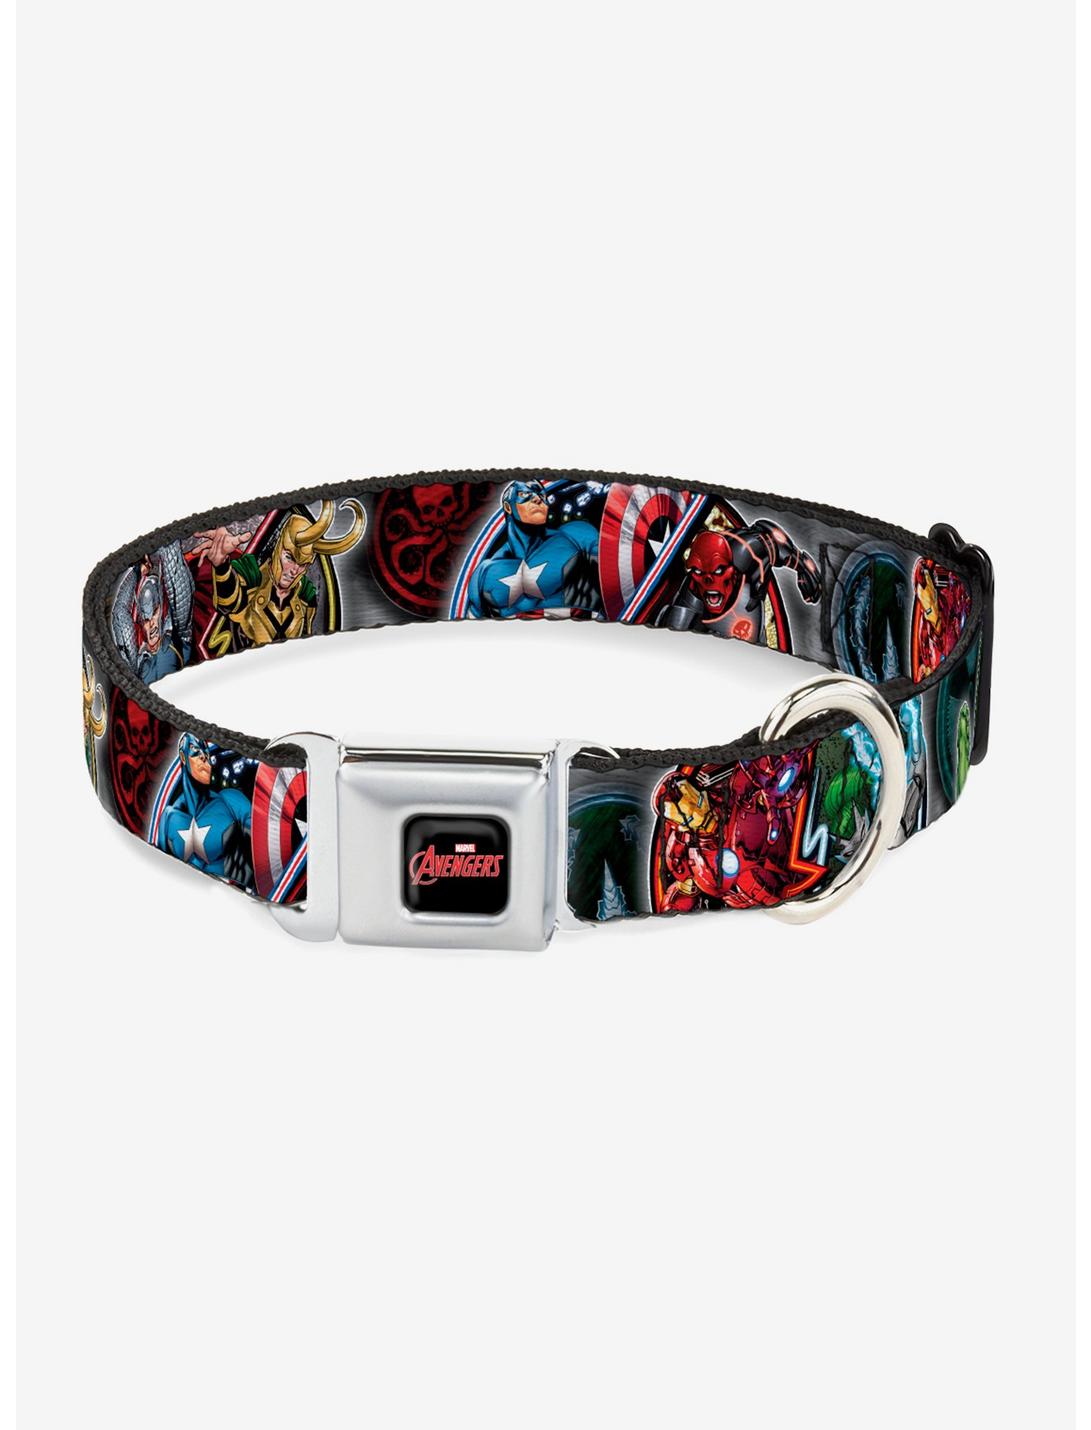 Marvel Avengers Superhero Villain Poses Seatbelt Buckle Pet Collar, MULTICOLOR, hi-res